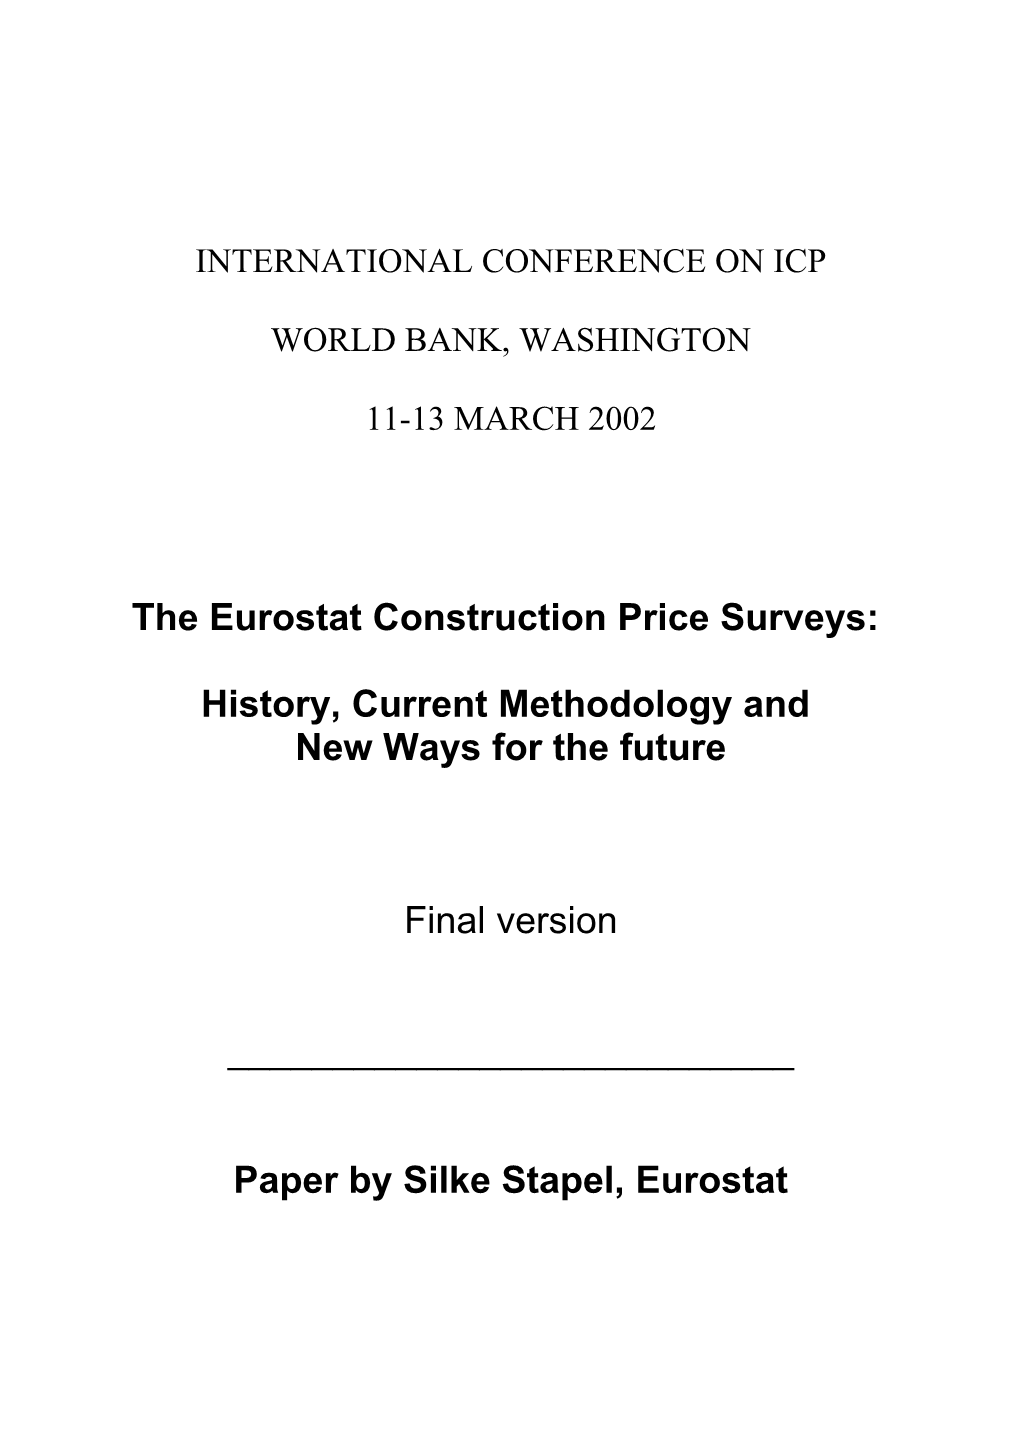 The Eurostat Construction Price Surveys